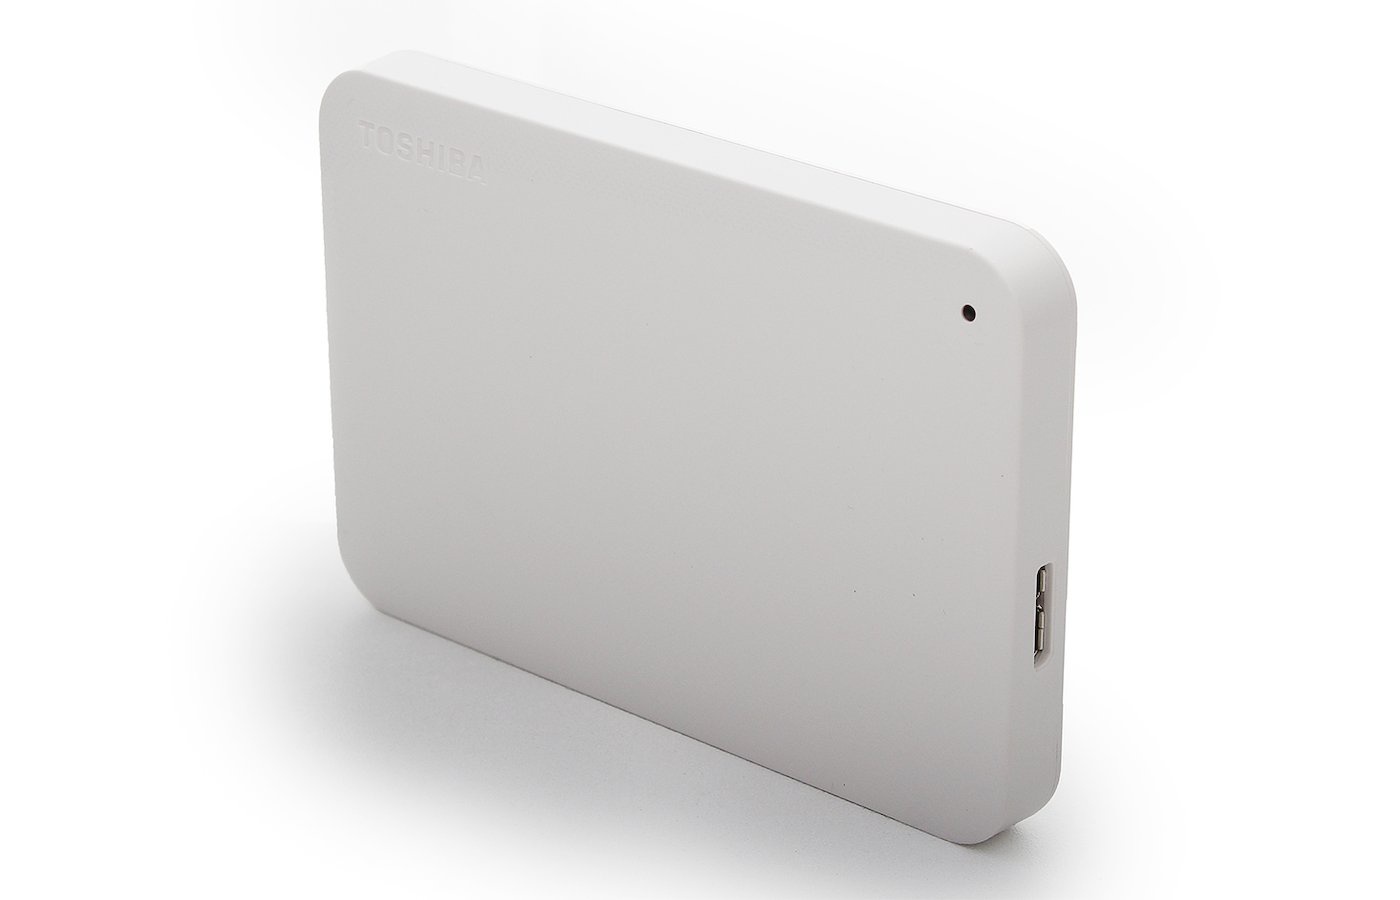 фото Портативный внешний жесткий диск  Toshiba HDD  500 GB Canvio Ready, 2.5", USB 3.0, белый